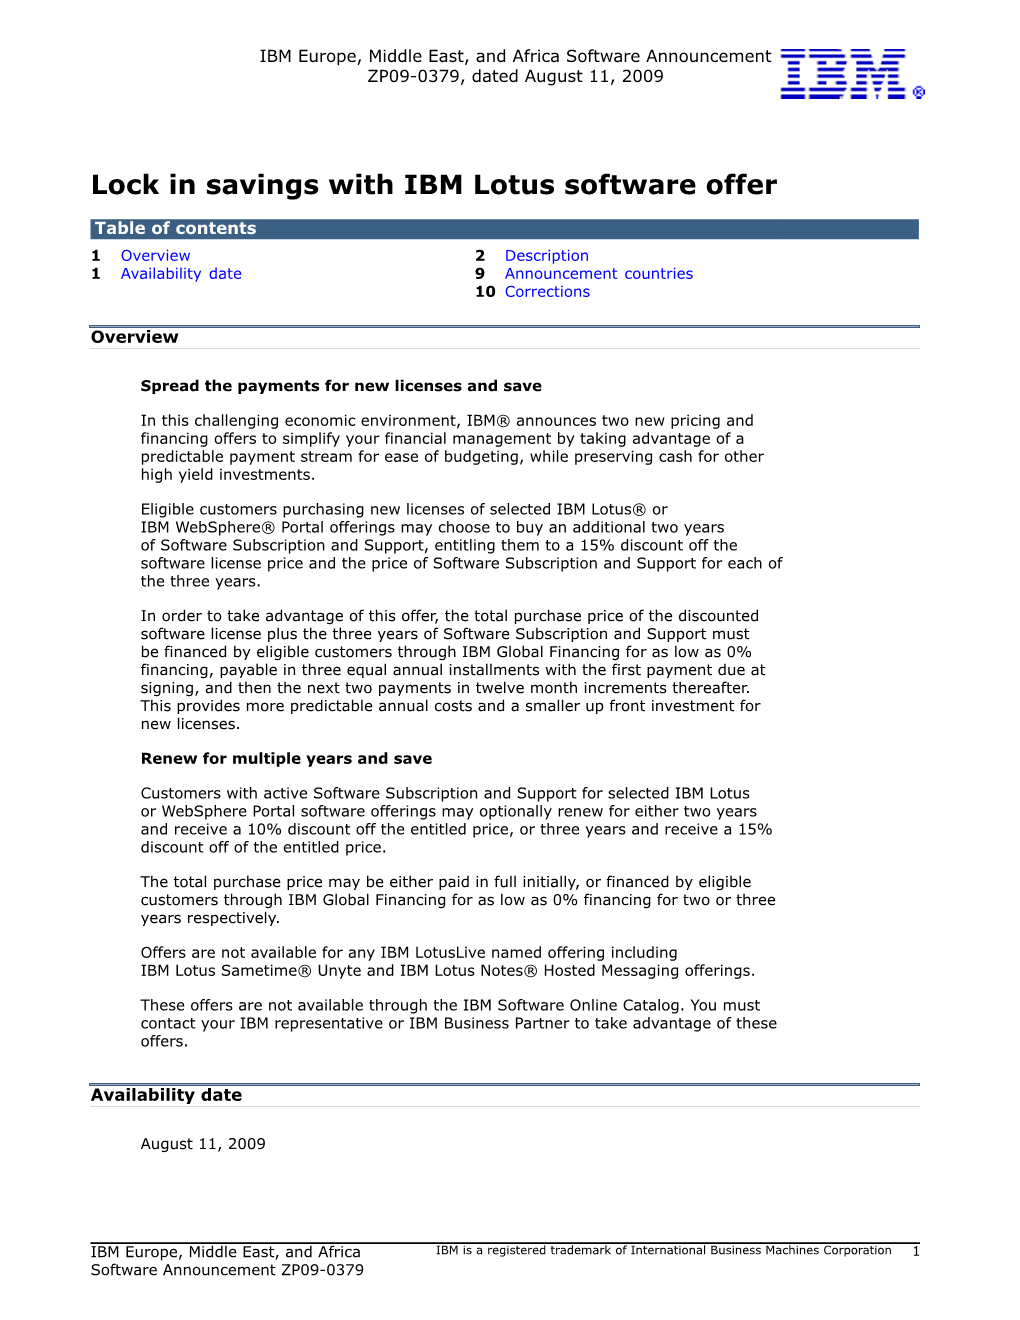 Lock in Savings with IBM Lotus Software Offer